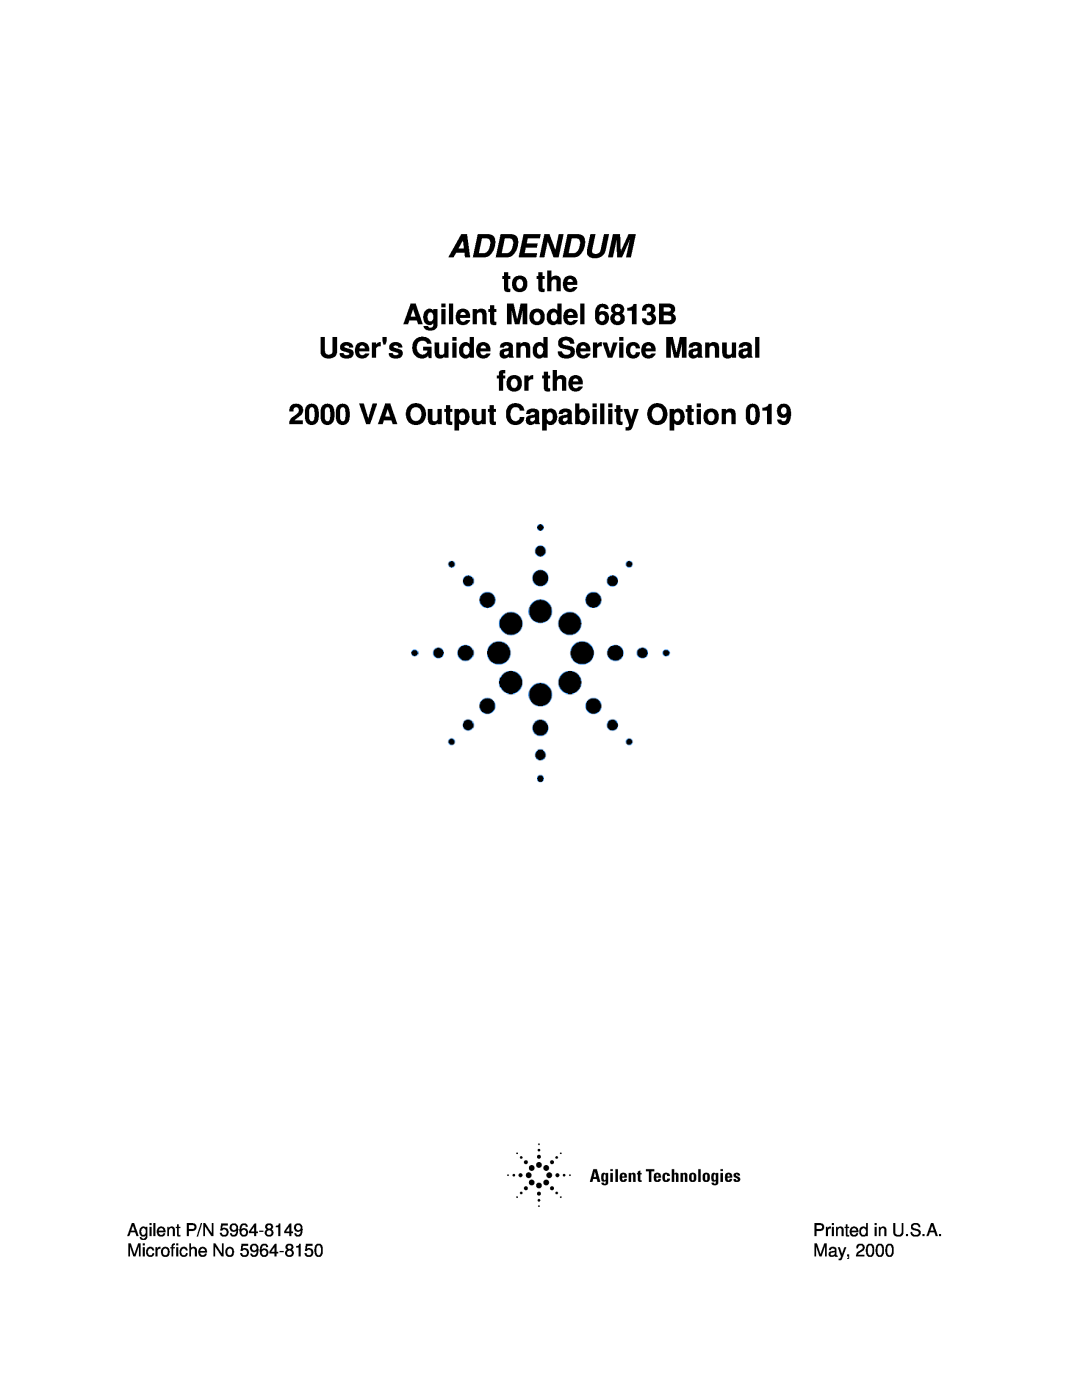 Agilent Technologies manual AC Power Solutions Agilent Models 6811B, 6812B, and 6813B, User’s Guide, Agilent Part No 